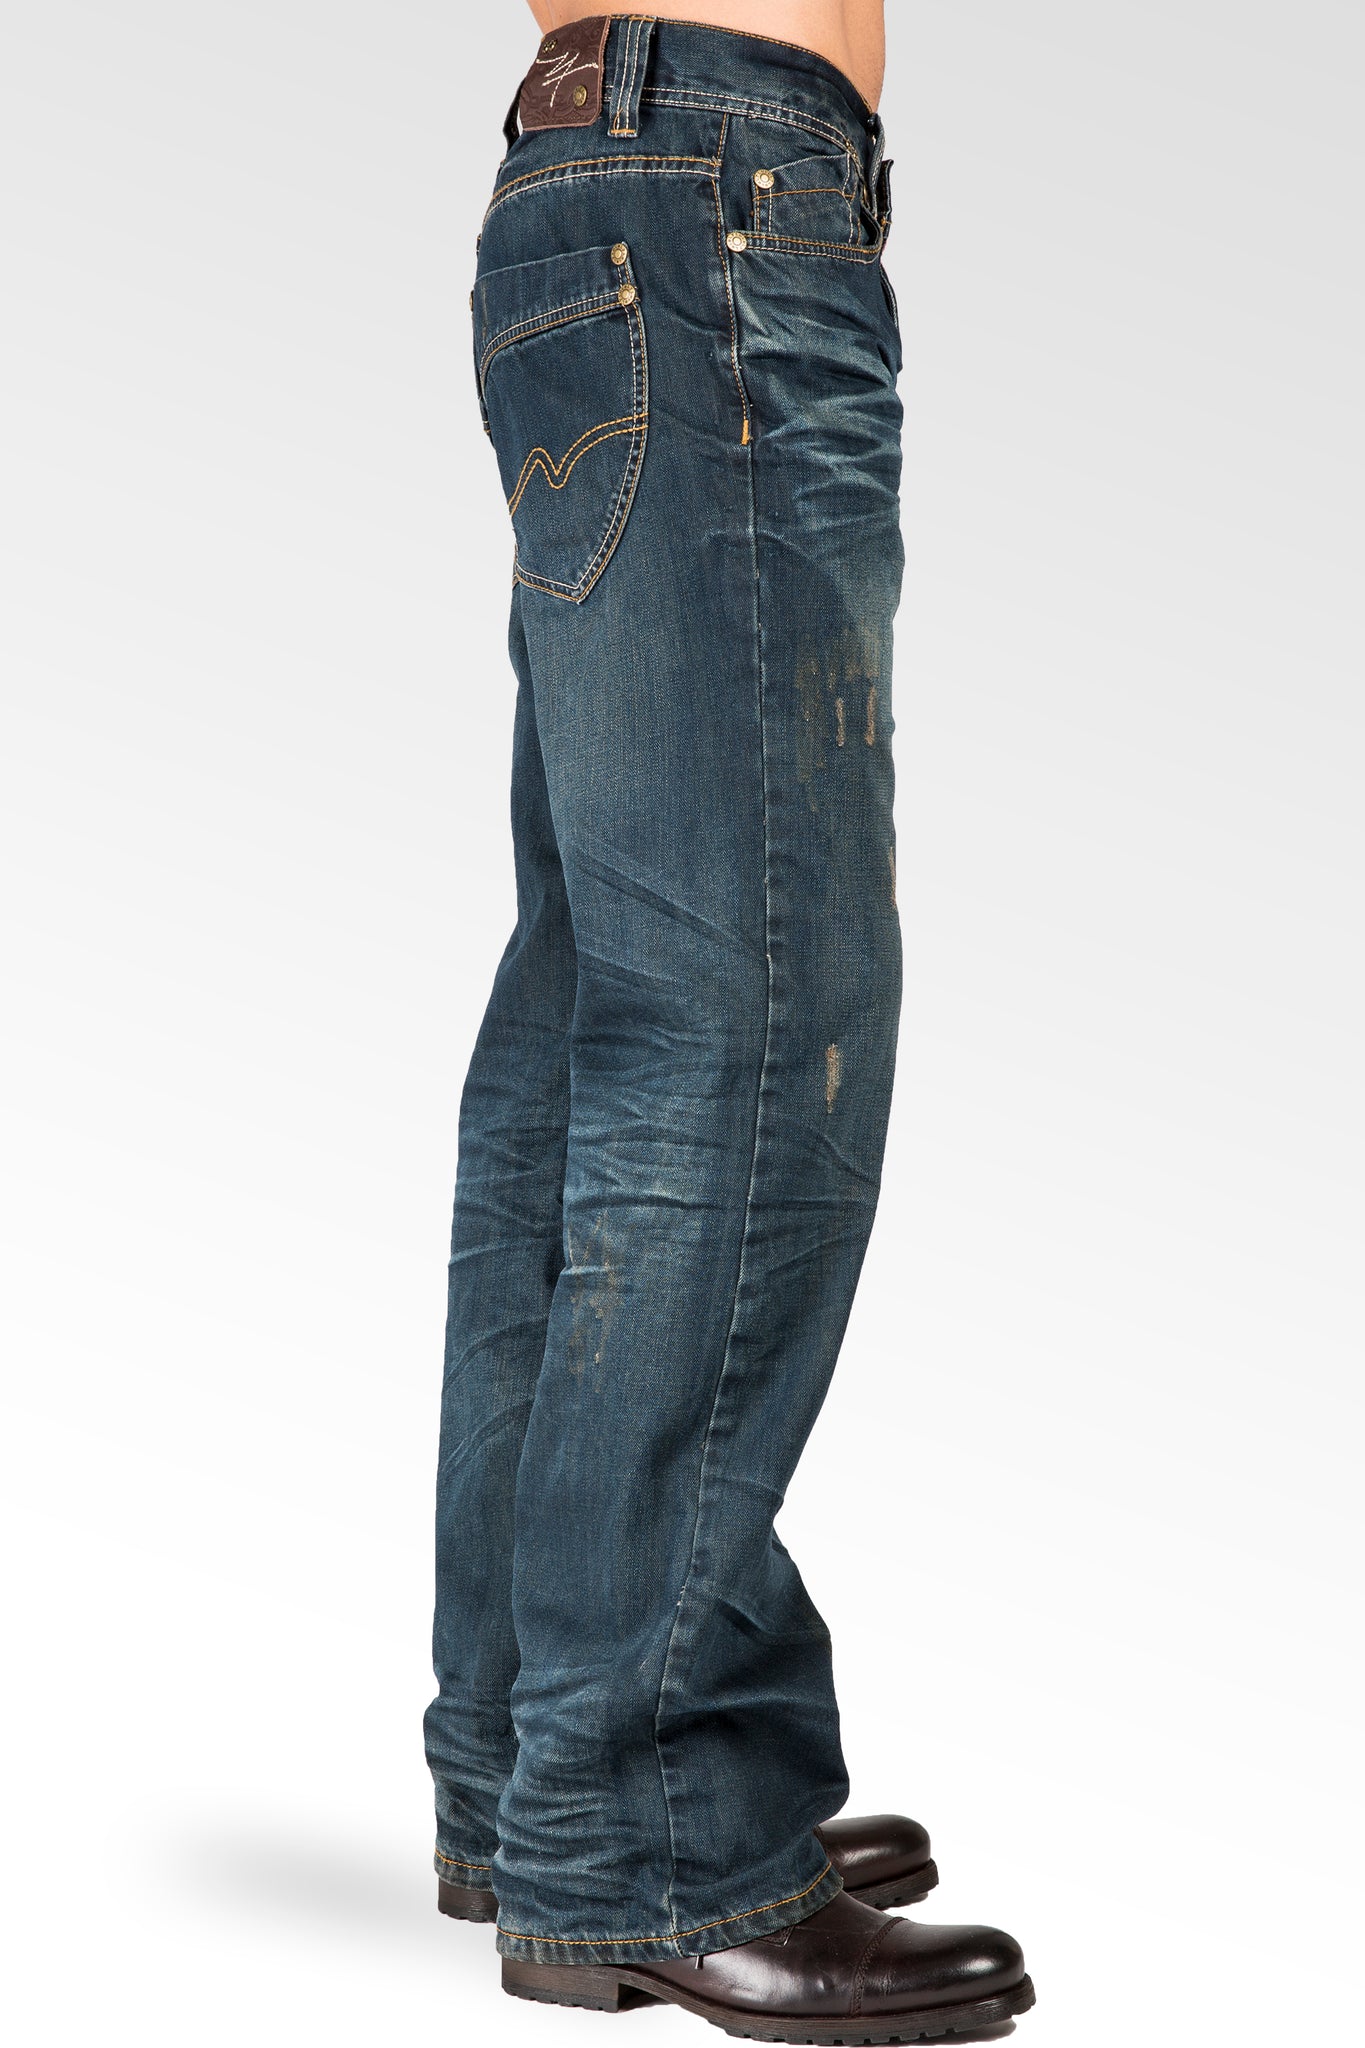 Midrise Relaxed Bootcut Blue Premium Denim 5 pocket Jeans Vintage Wash & Whiskering